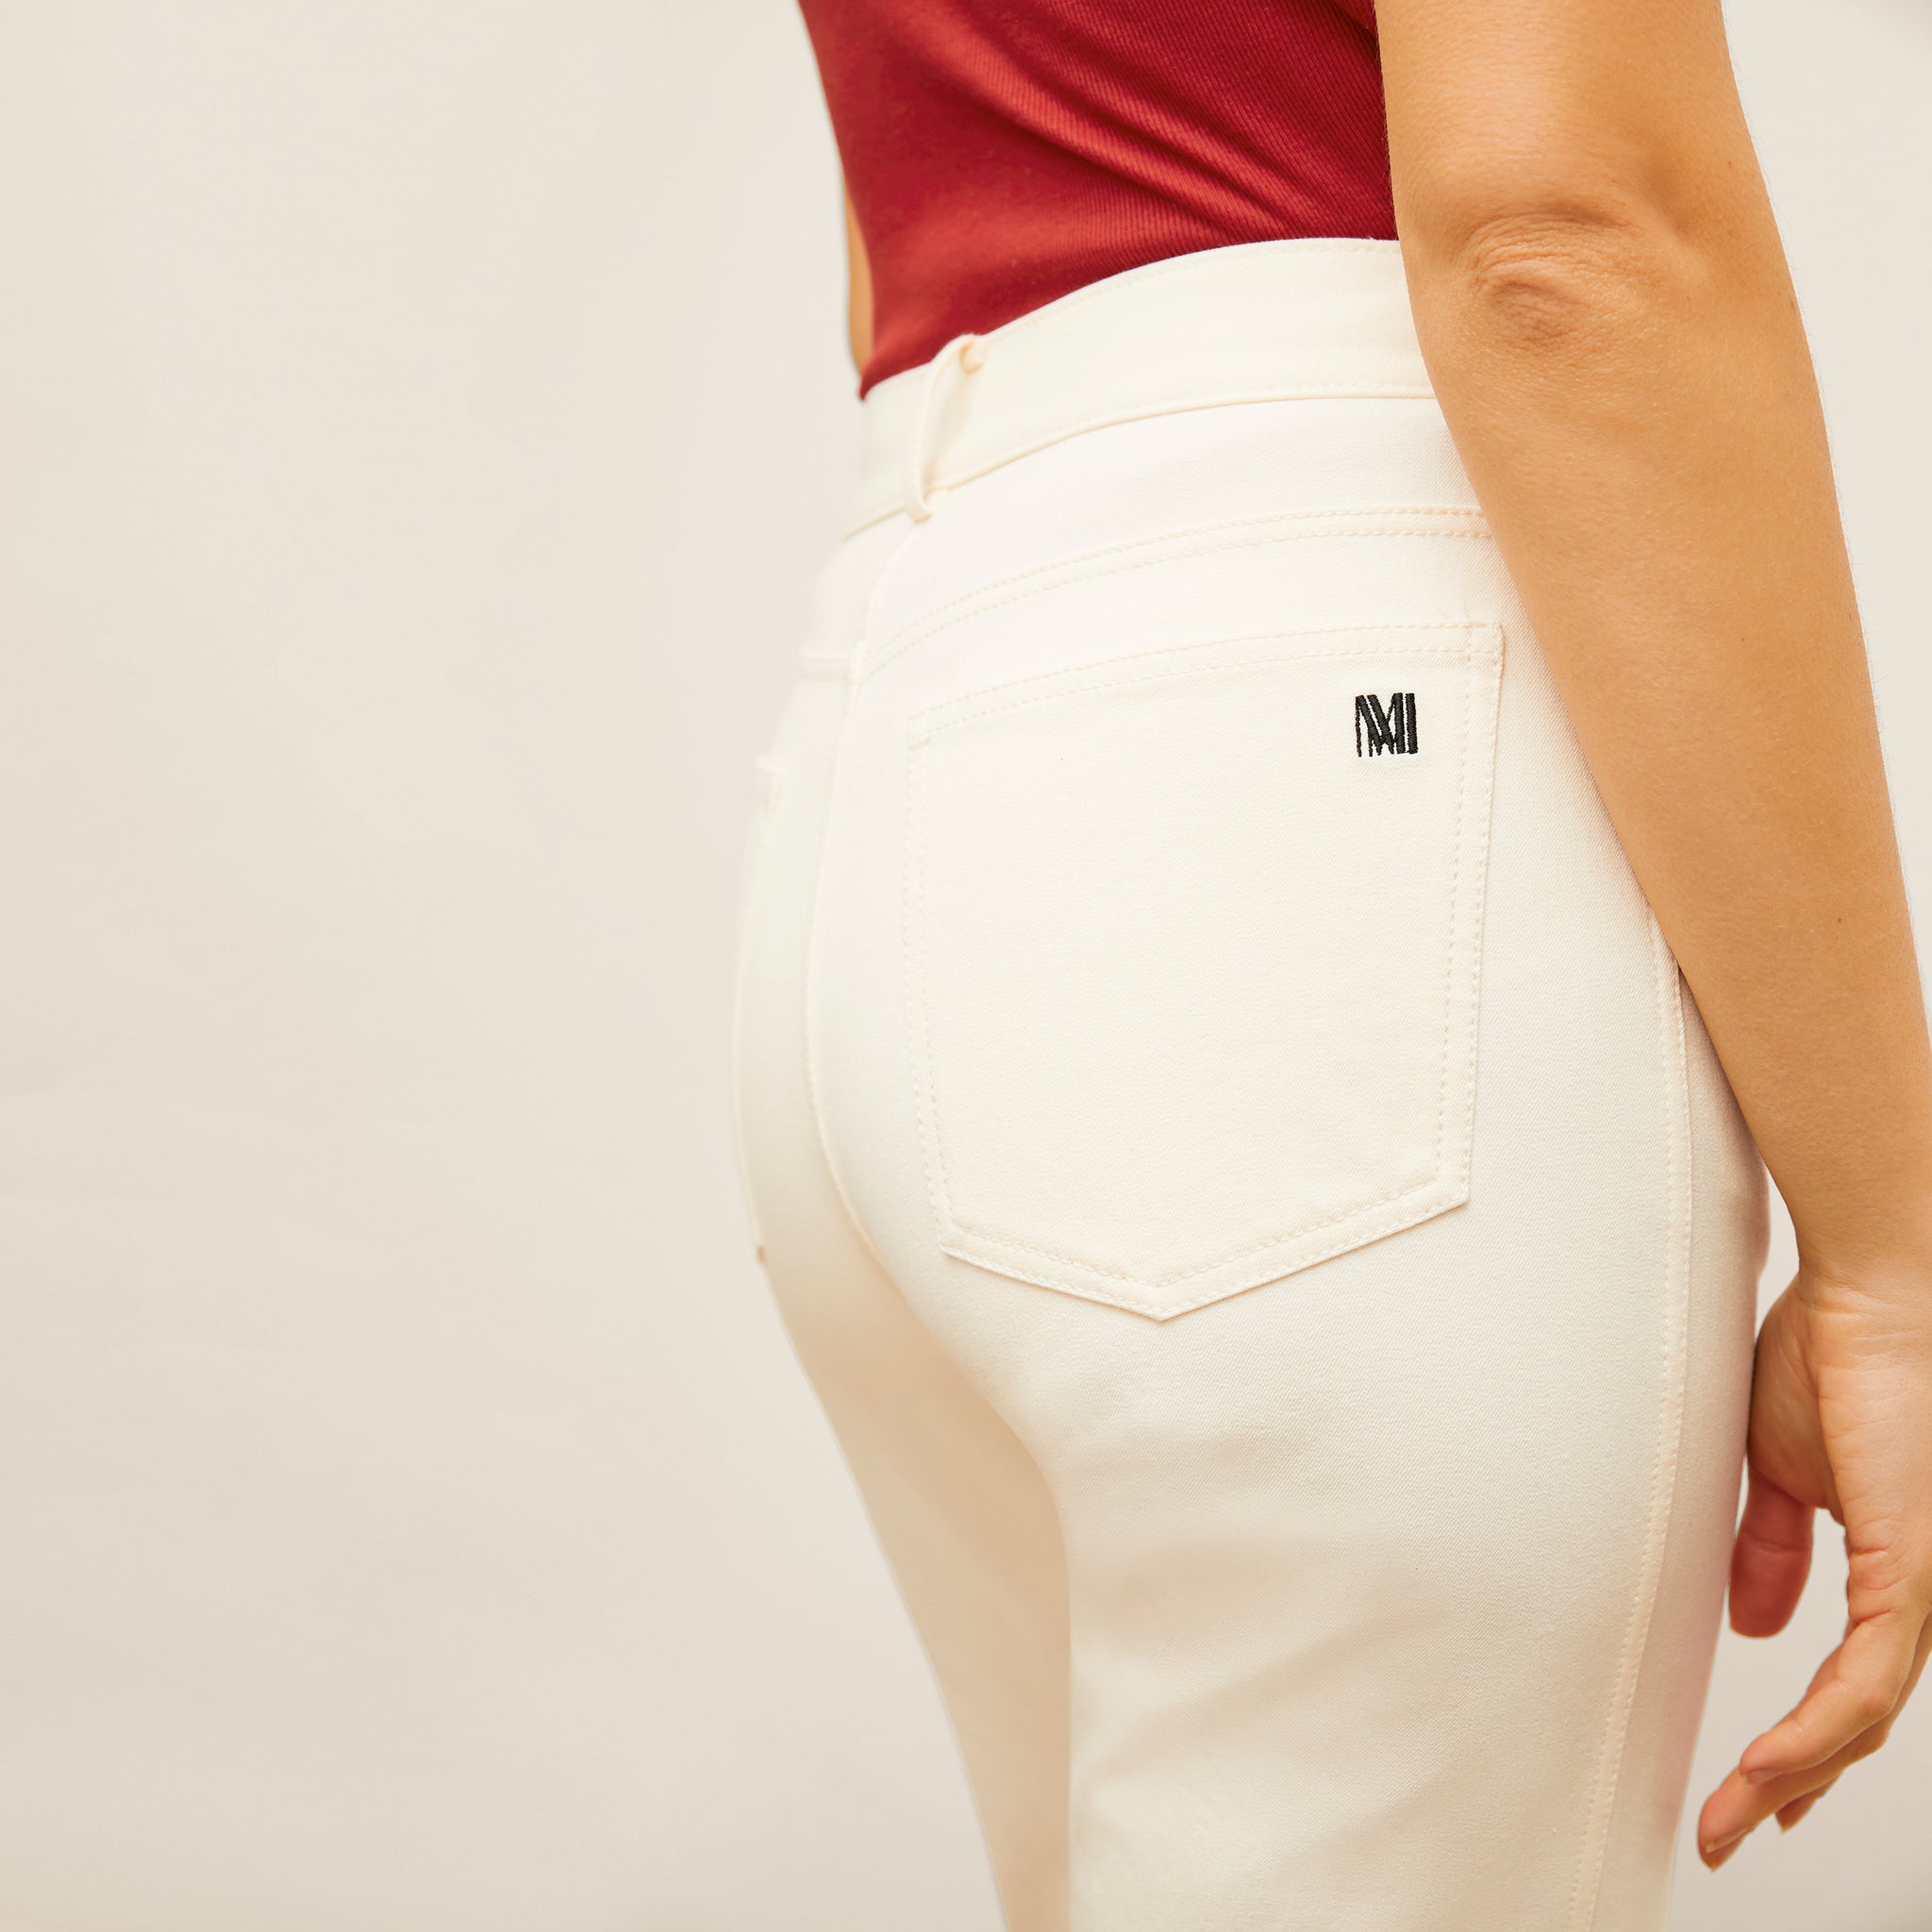 detail image of the M.M. LaFleur Logo on the back pocket of the jean